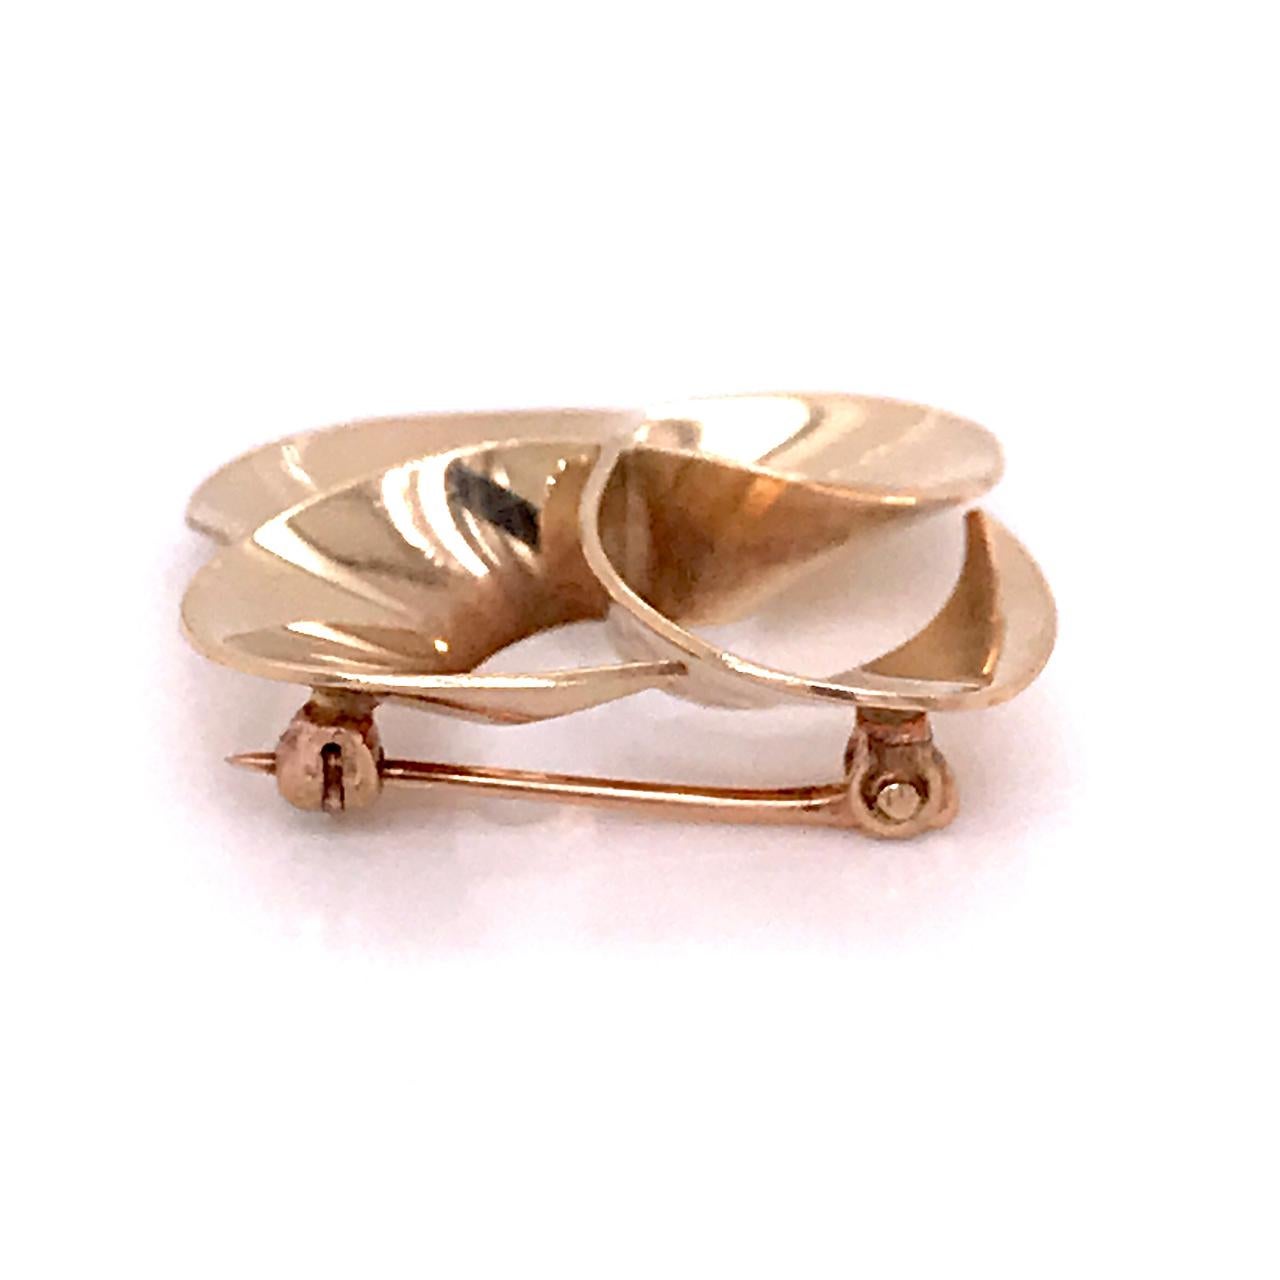 Tiffany & Co. 14 Karat Gold Modern Pin-Wheel Brooch or Pin For Sale 2